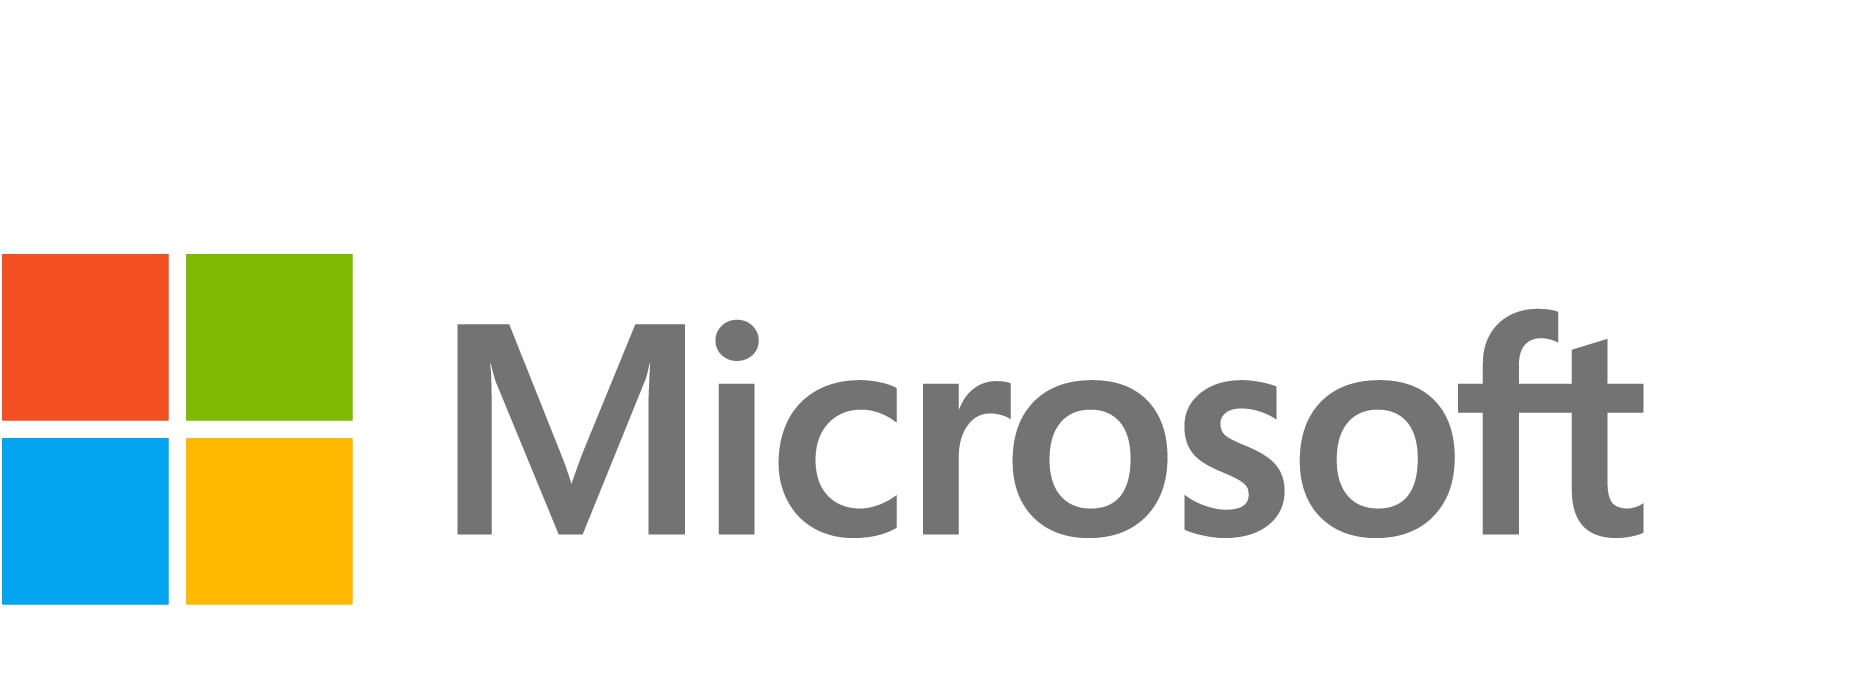 Microsoft Bing Maps Asset Management Platform Services - subscription licen